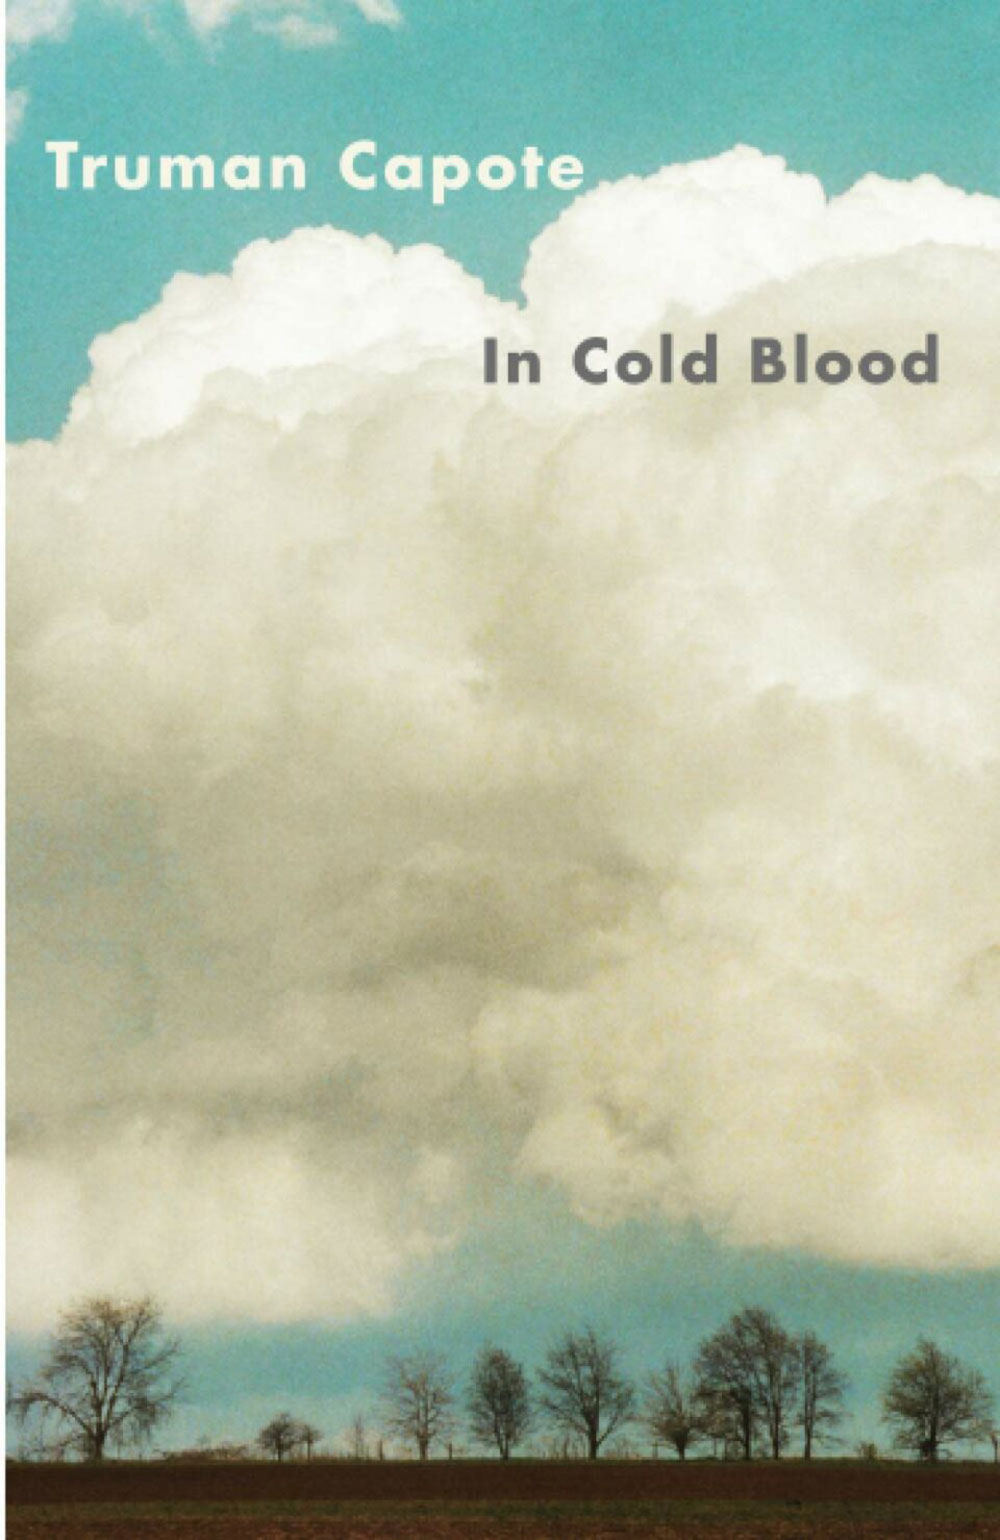 Best True Crime Books - In Cold Blood